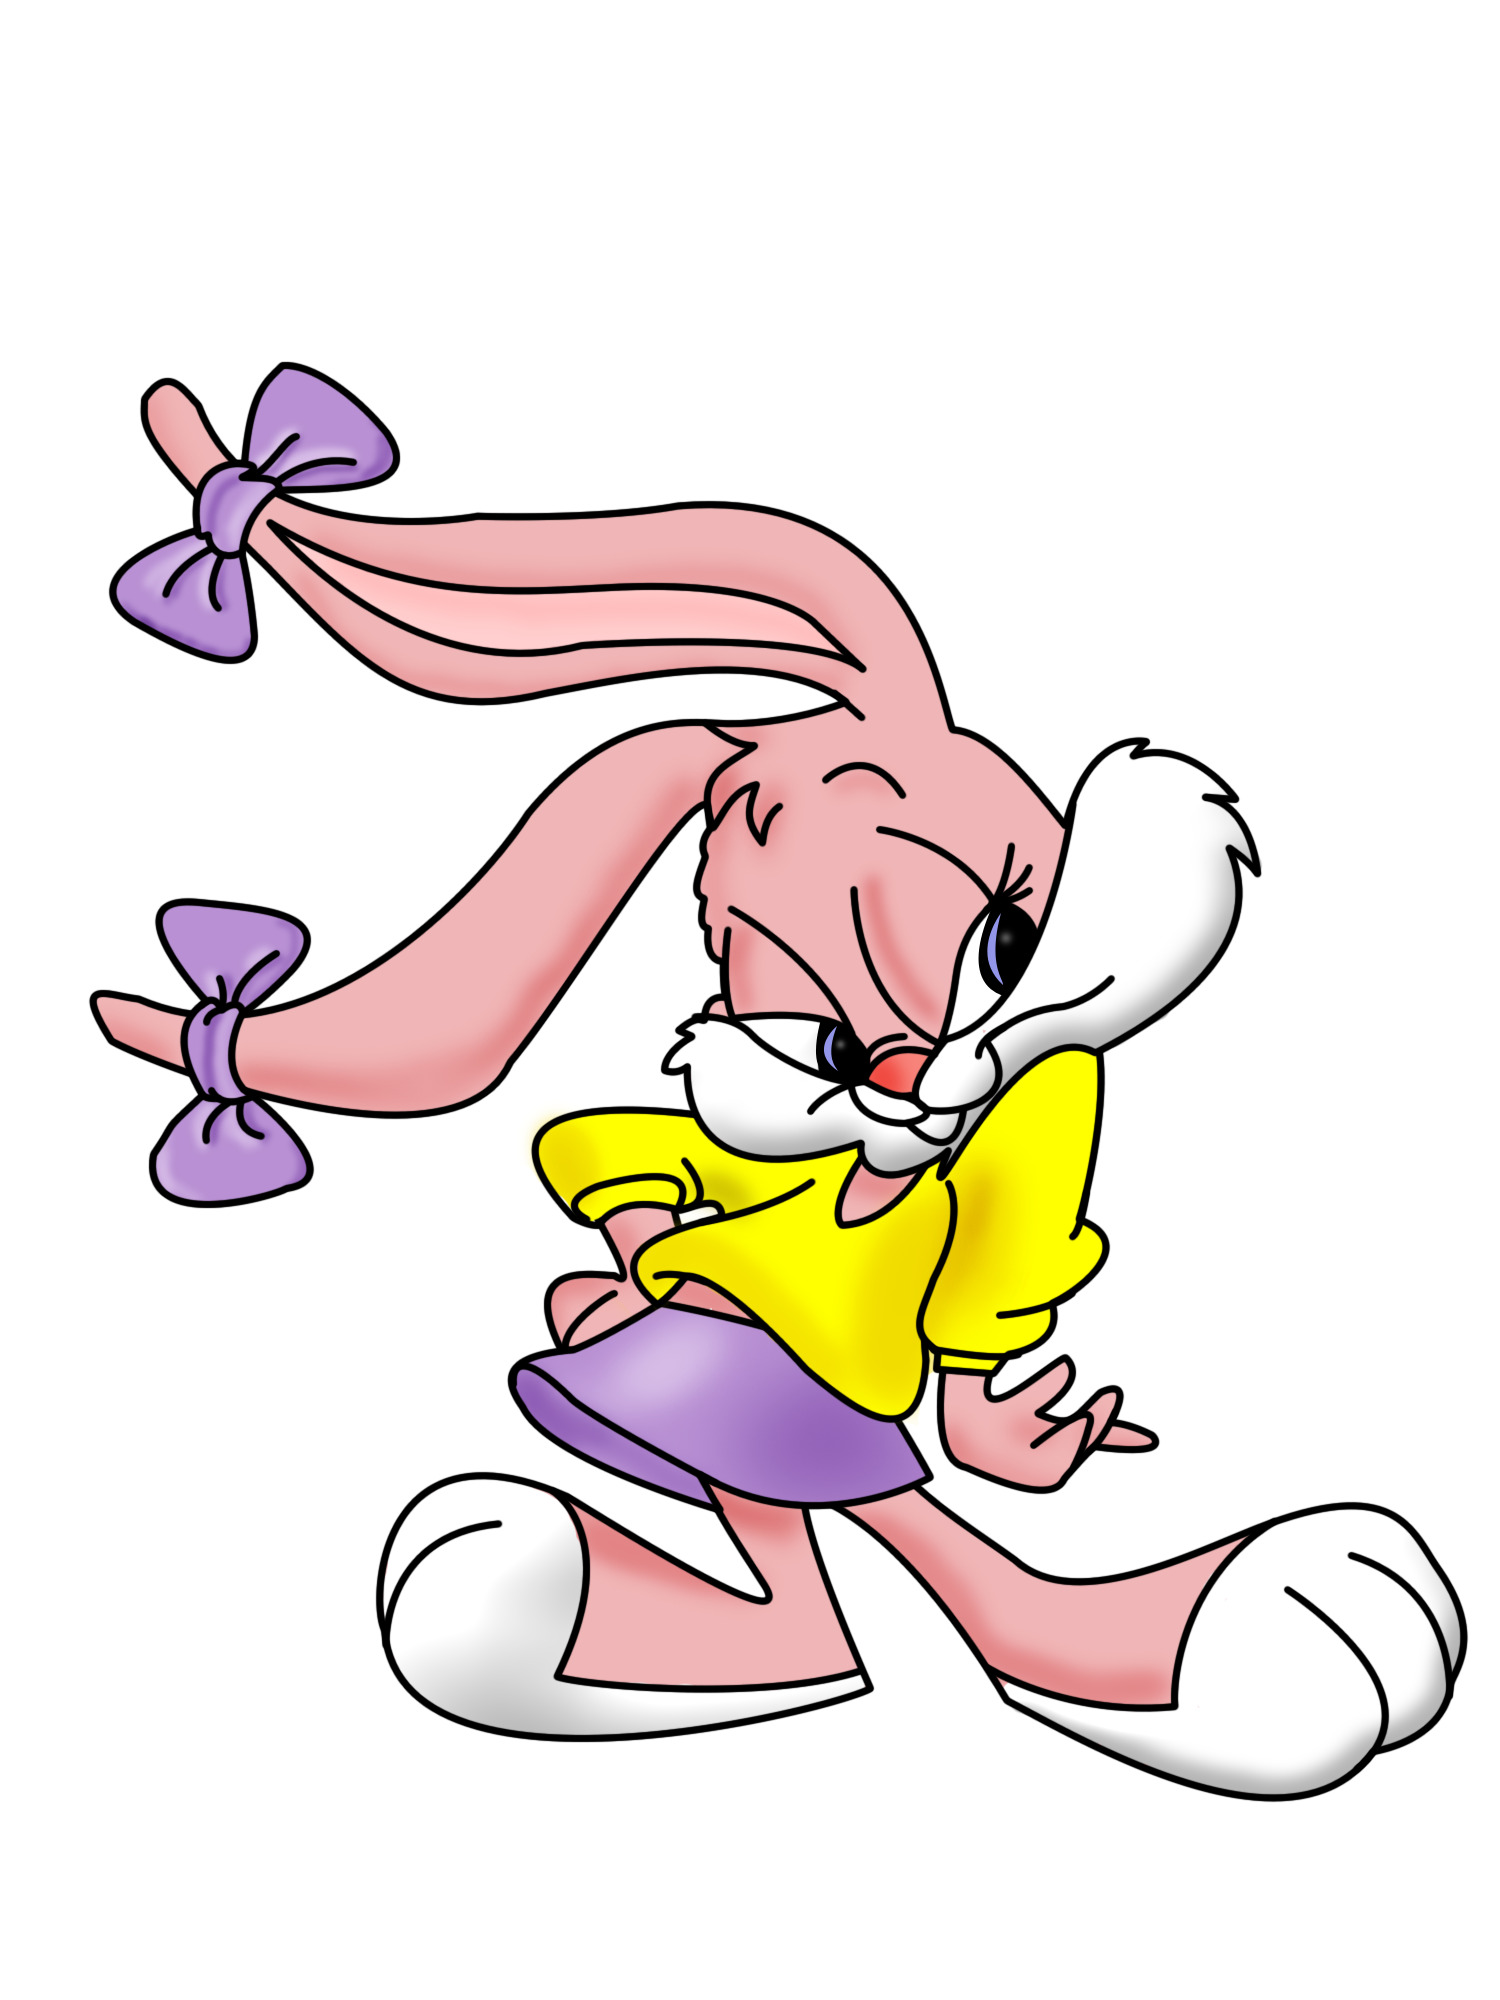 Babs bunny. Бэбс Банни. Бэбс Банни Babs. Бэбс Банни Babs Bunny. Багз Банни Looney Tunes крольчиха.